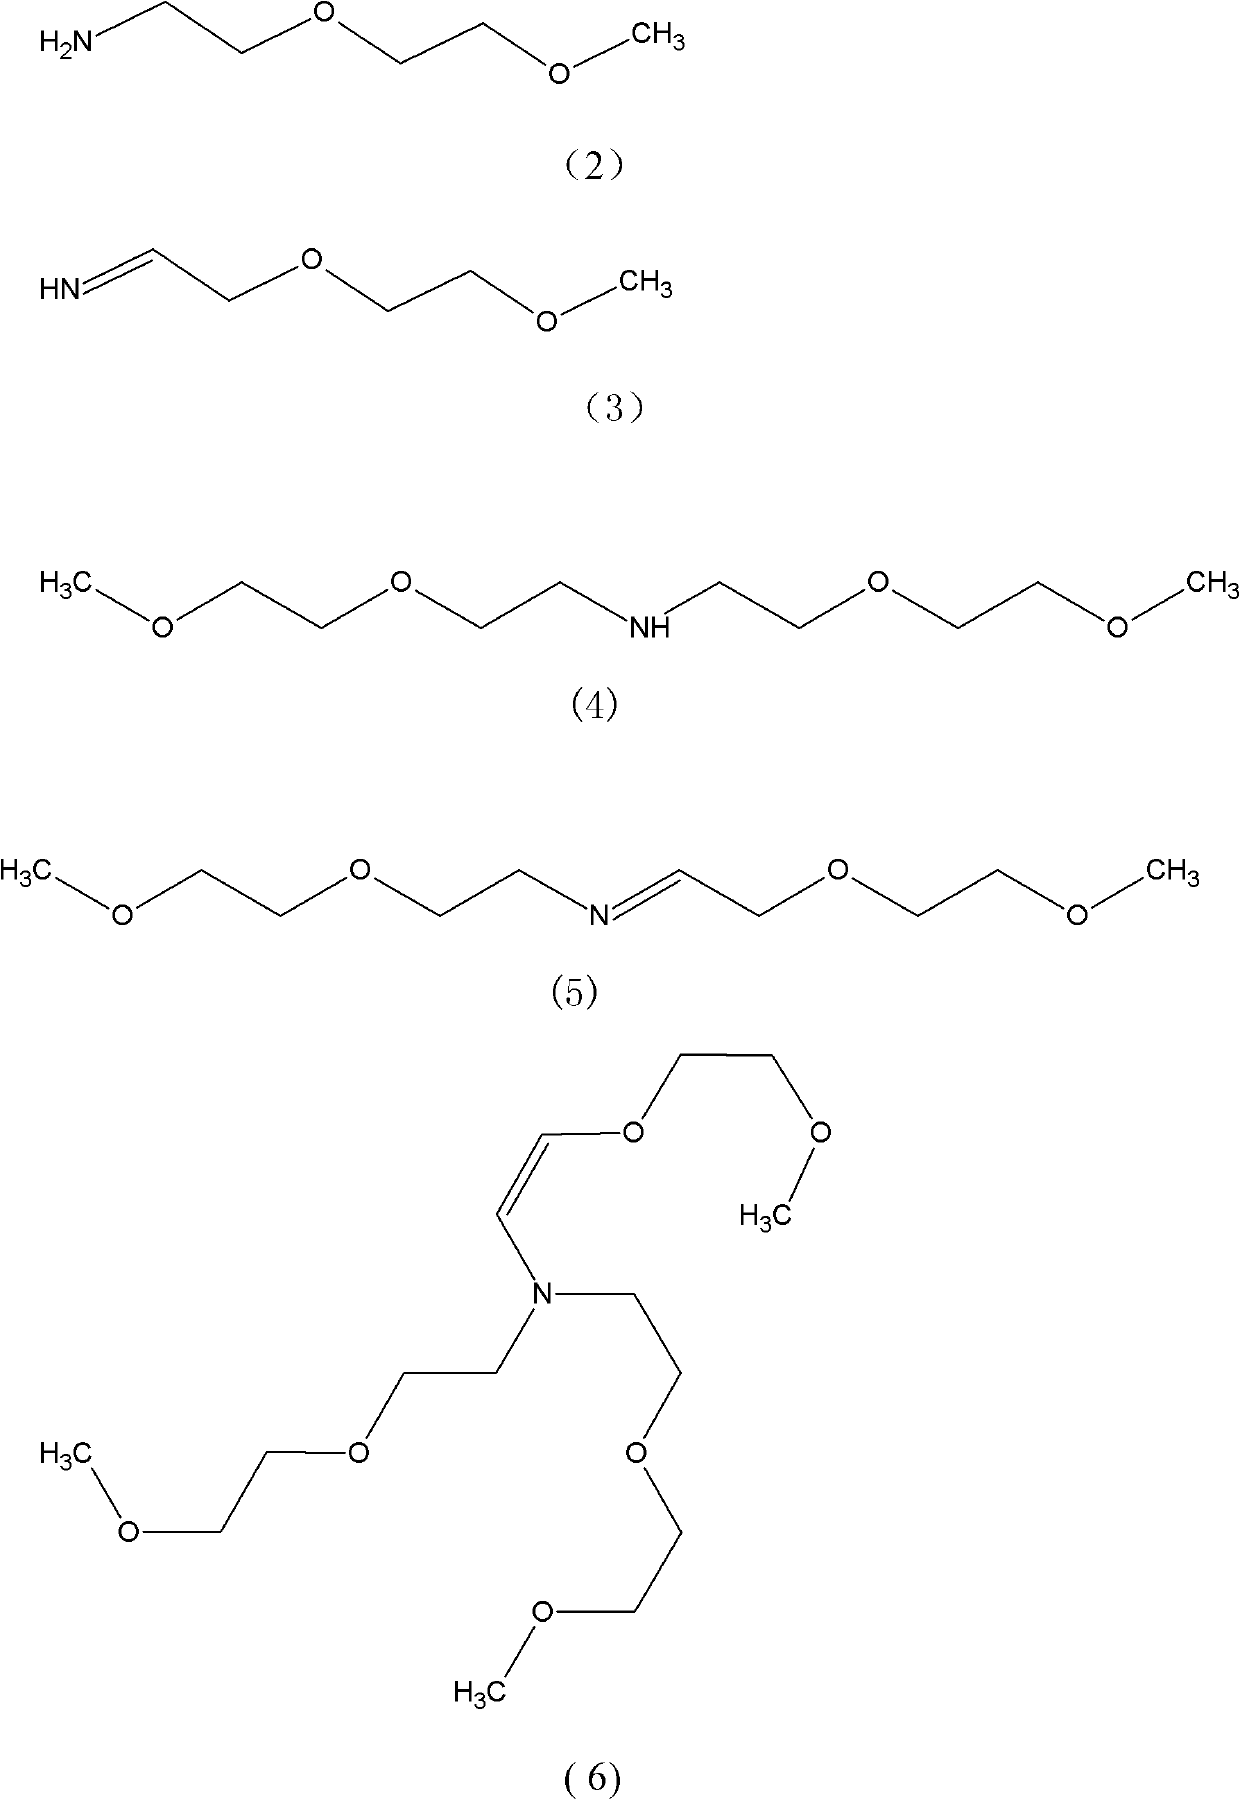 Method for synthesizing tris(dioxa-3,6-heptyl)amine